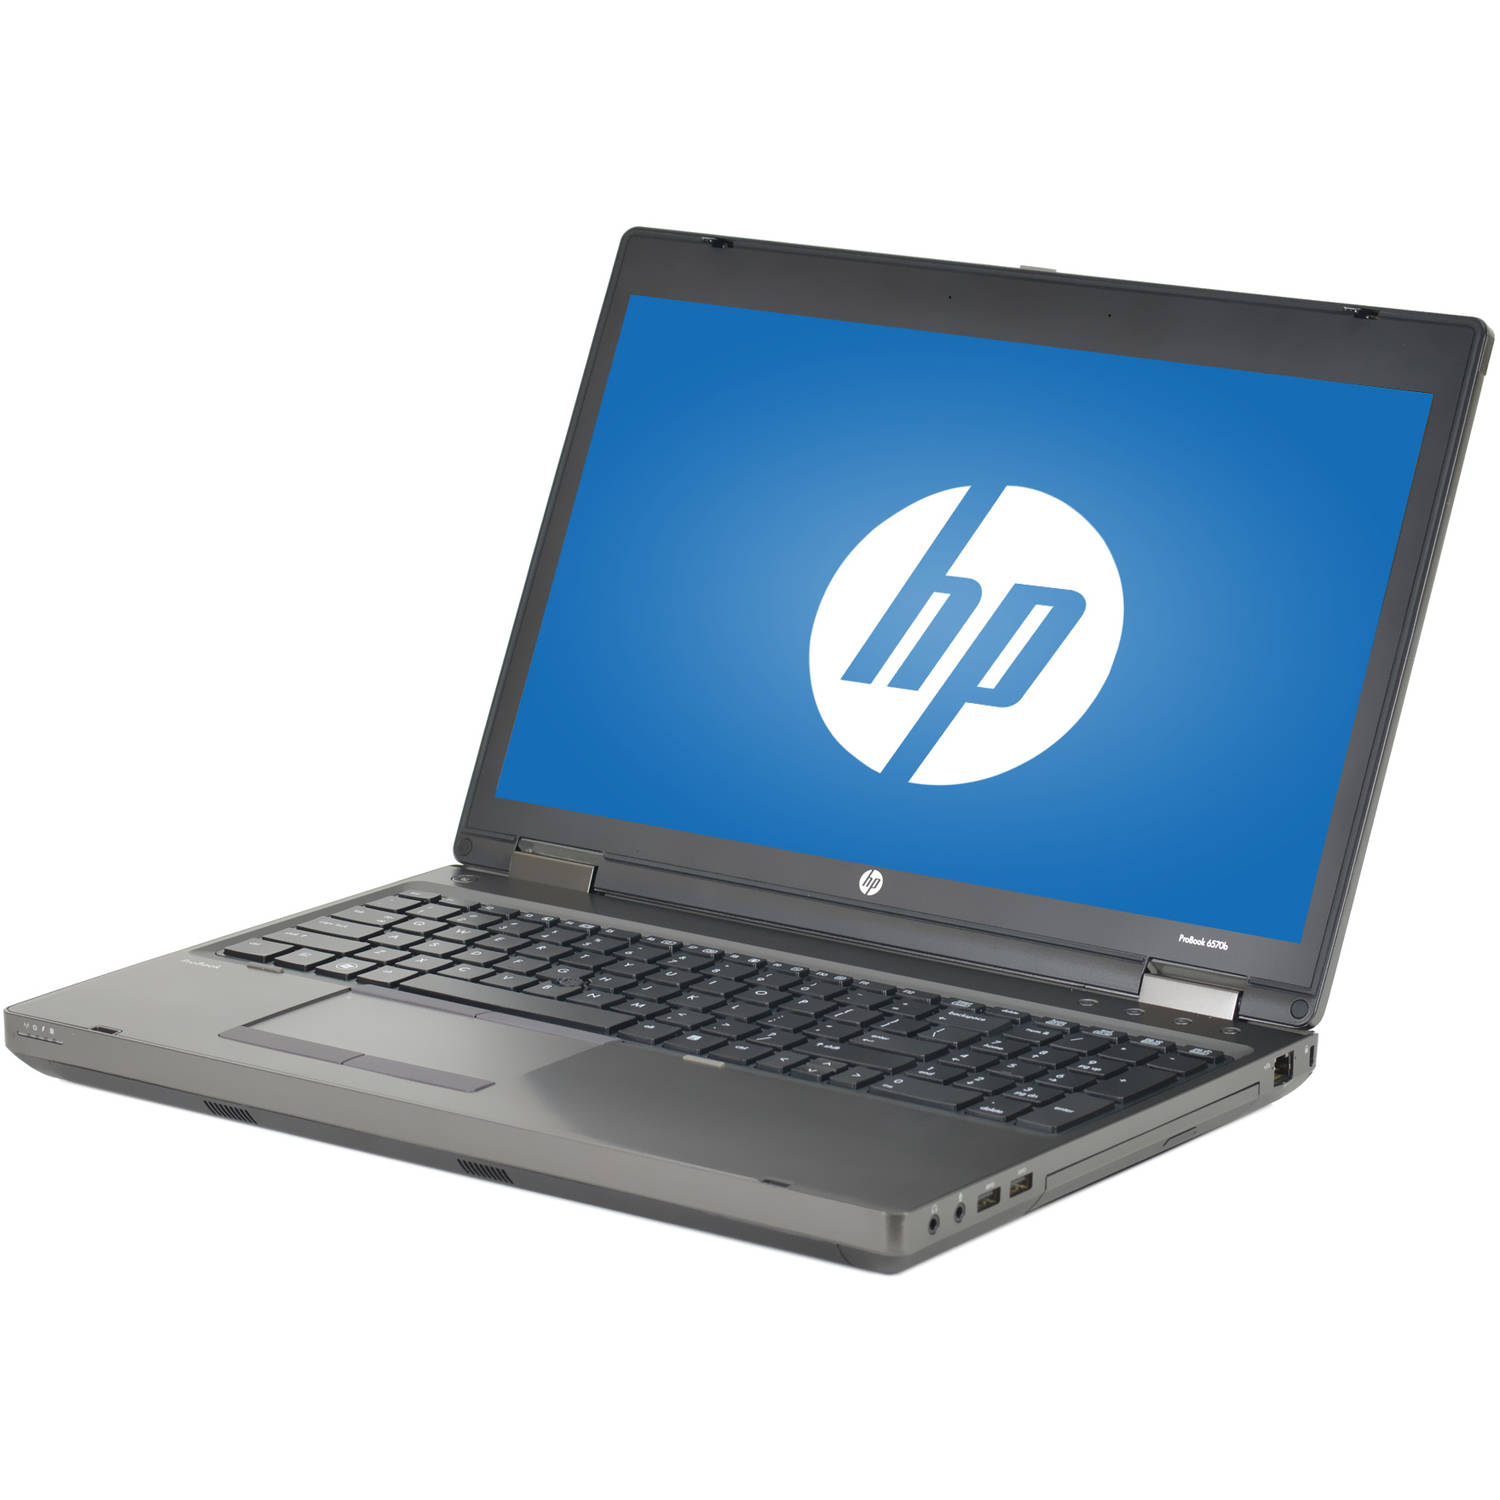 HP 15.6" ProBook 6570B WA5-0879 Laptop PC with Intel Core i5-3210M Processor, 12GB Memory, 750GB Hard Drive and Windows 10 Pro (Refurbished) - image 1 of 5